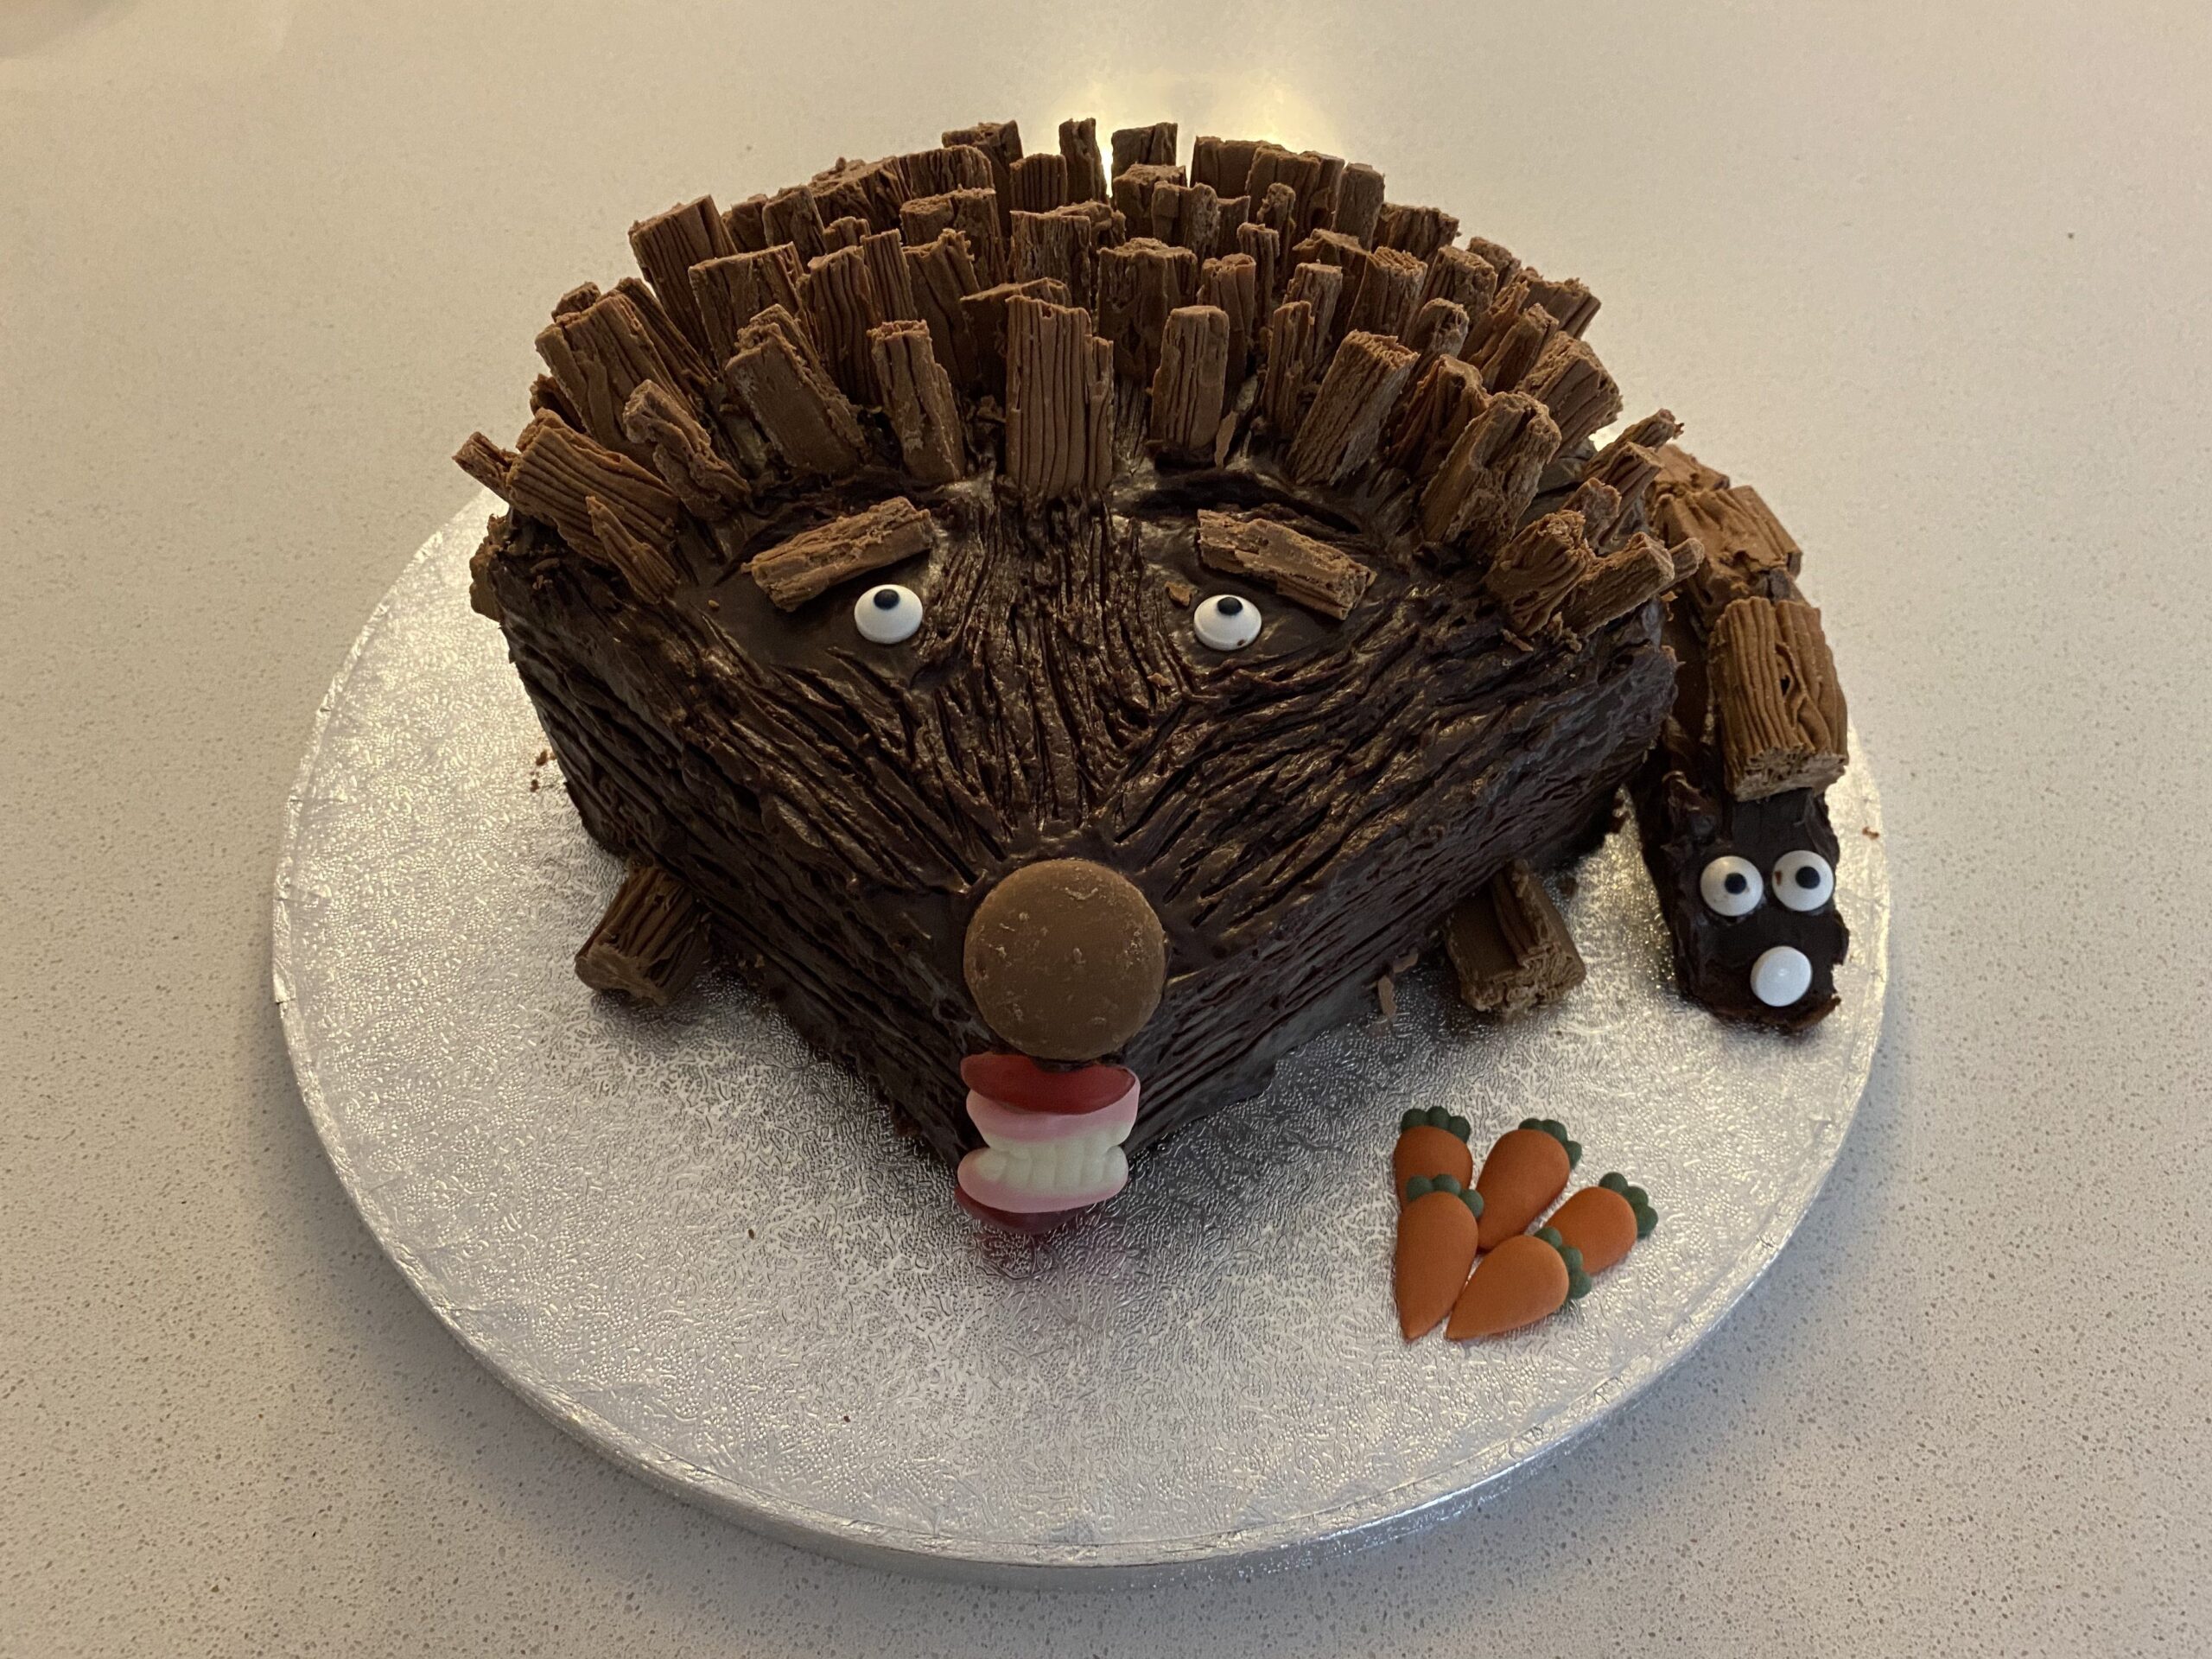 Hedgehog Layer Cake - Classy Girl Cupcakes